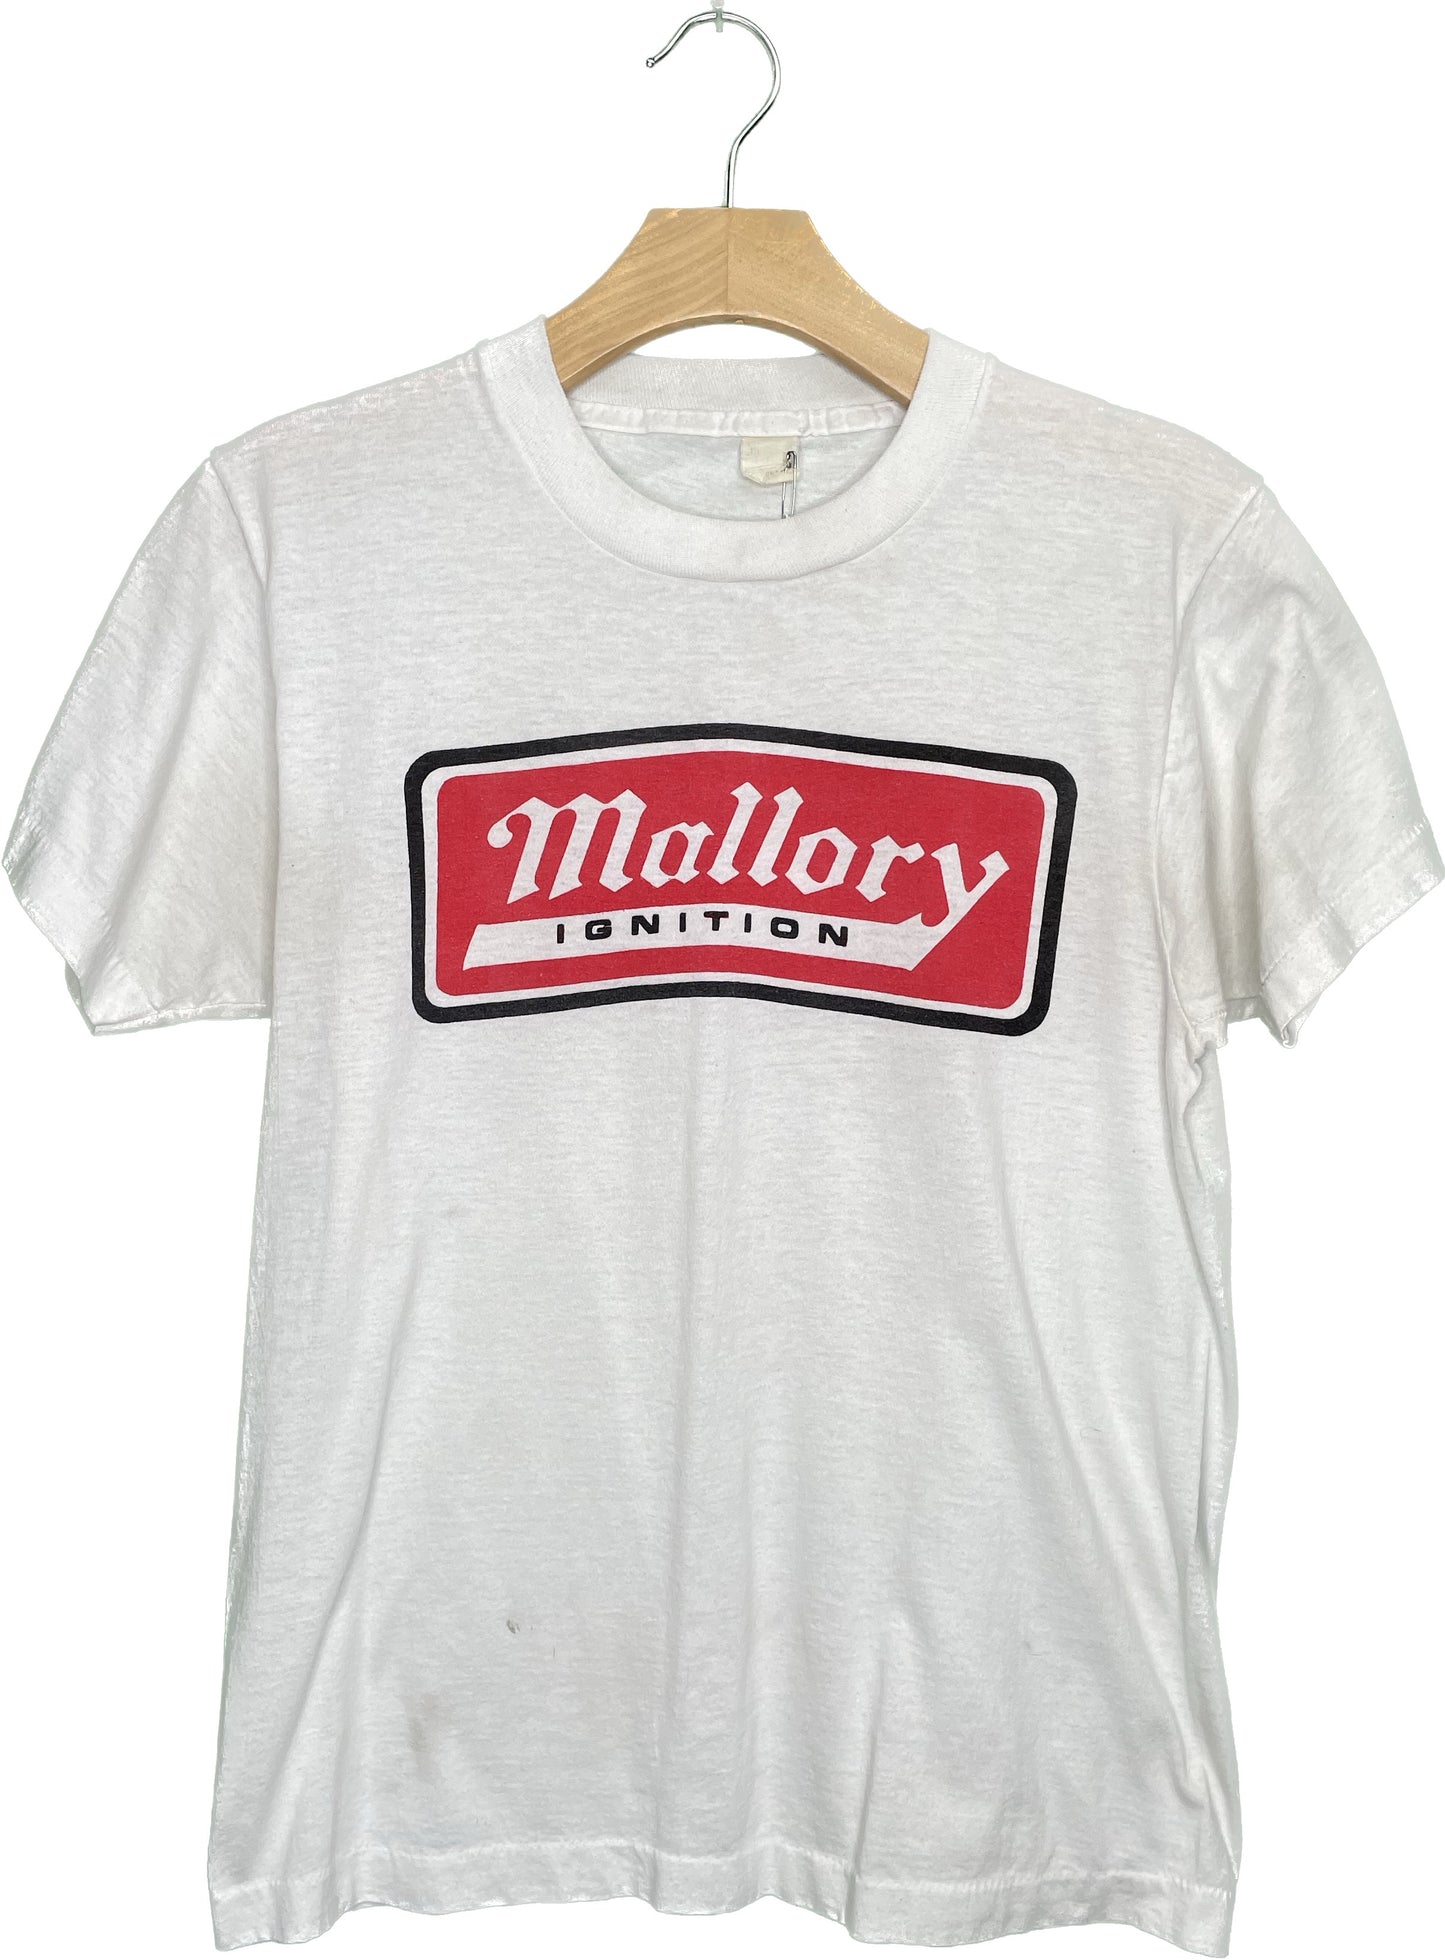 Vintage XS/S Mallory Ignition Paper Thin White T-Shirt Single Stitch